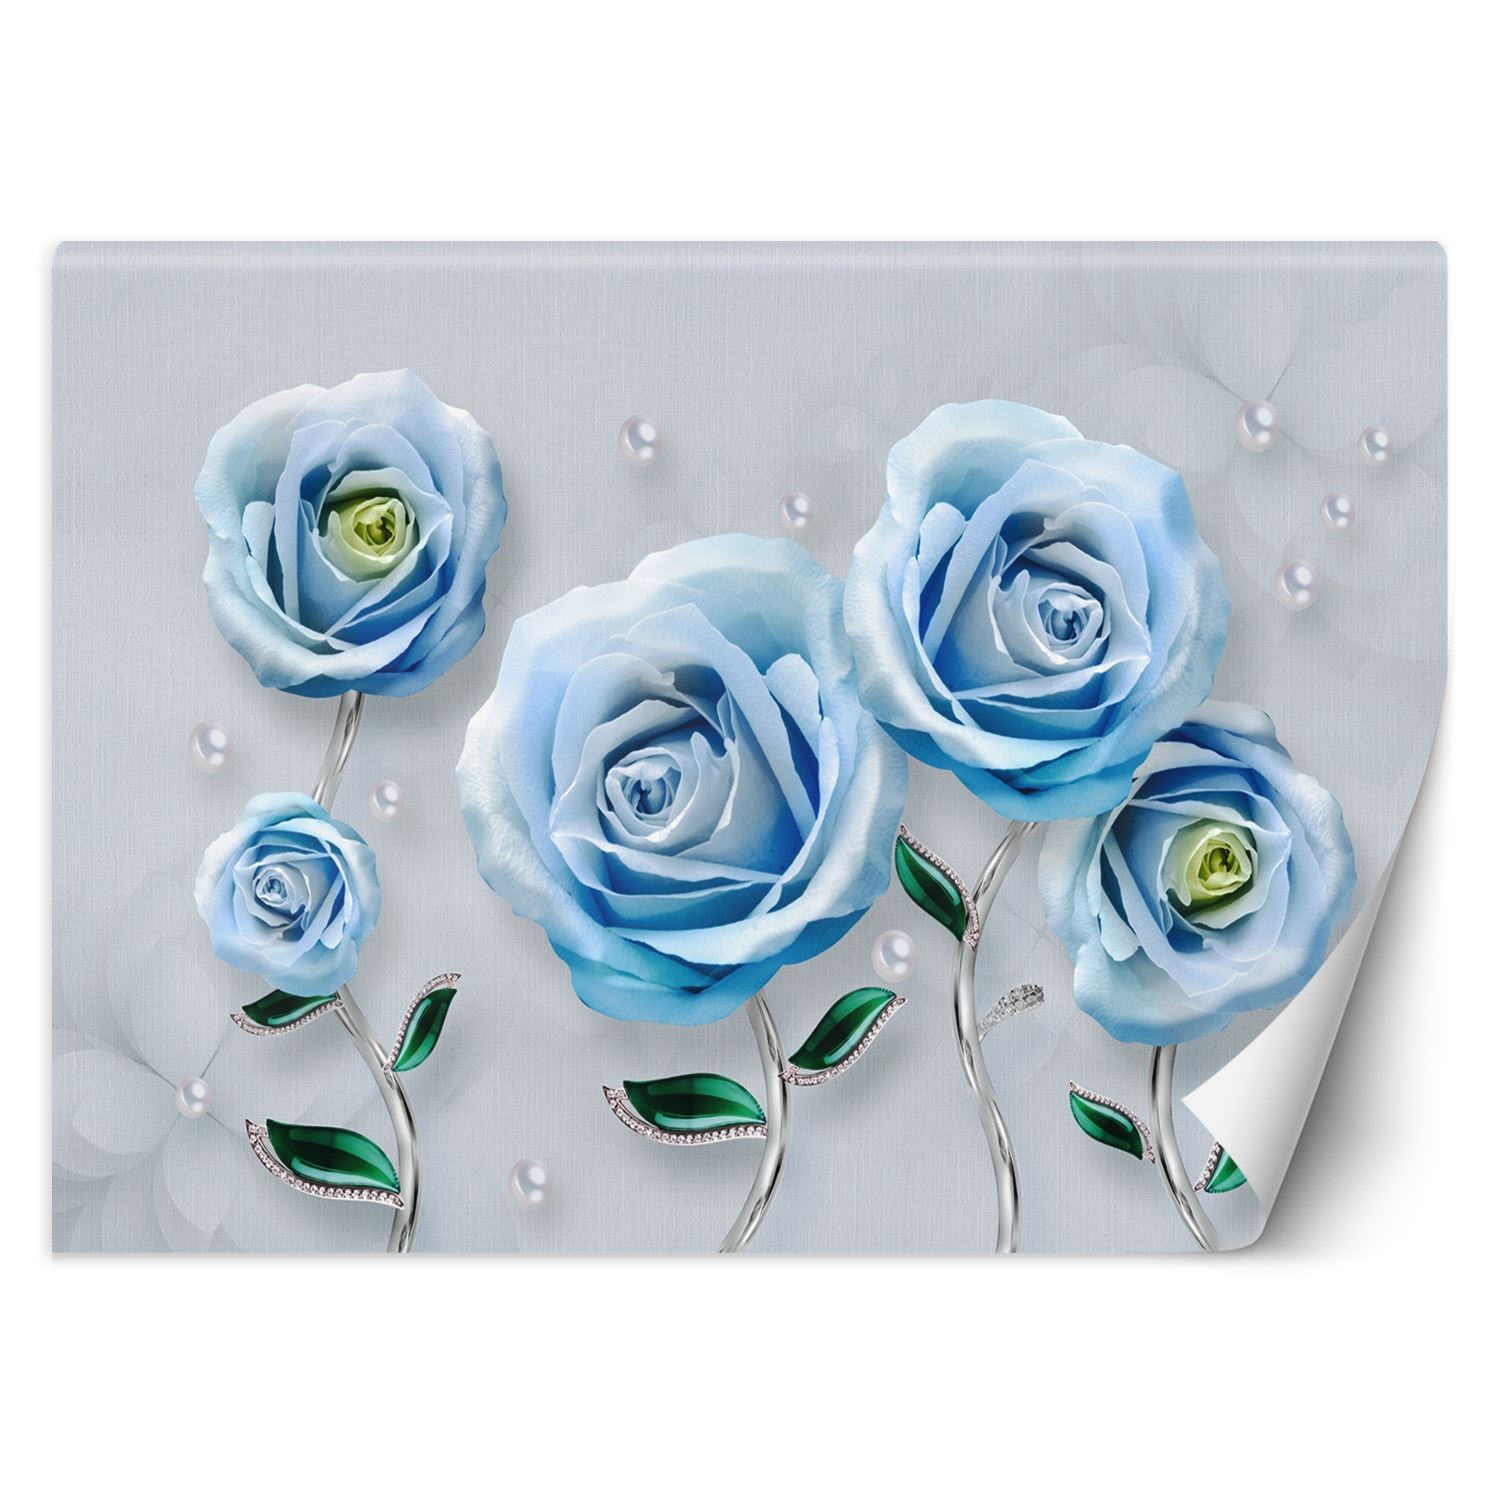 Trend24 – Behang – Blue Roses 3D – Behangpapier – Fotobehang Bloemen – Behang Woonkamer – 200x140x2 cm – Incl. behanglijm